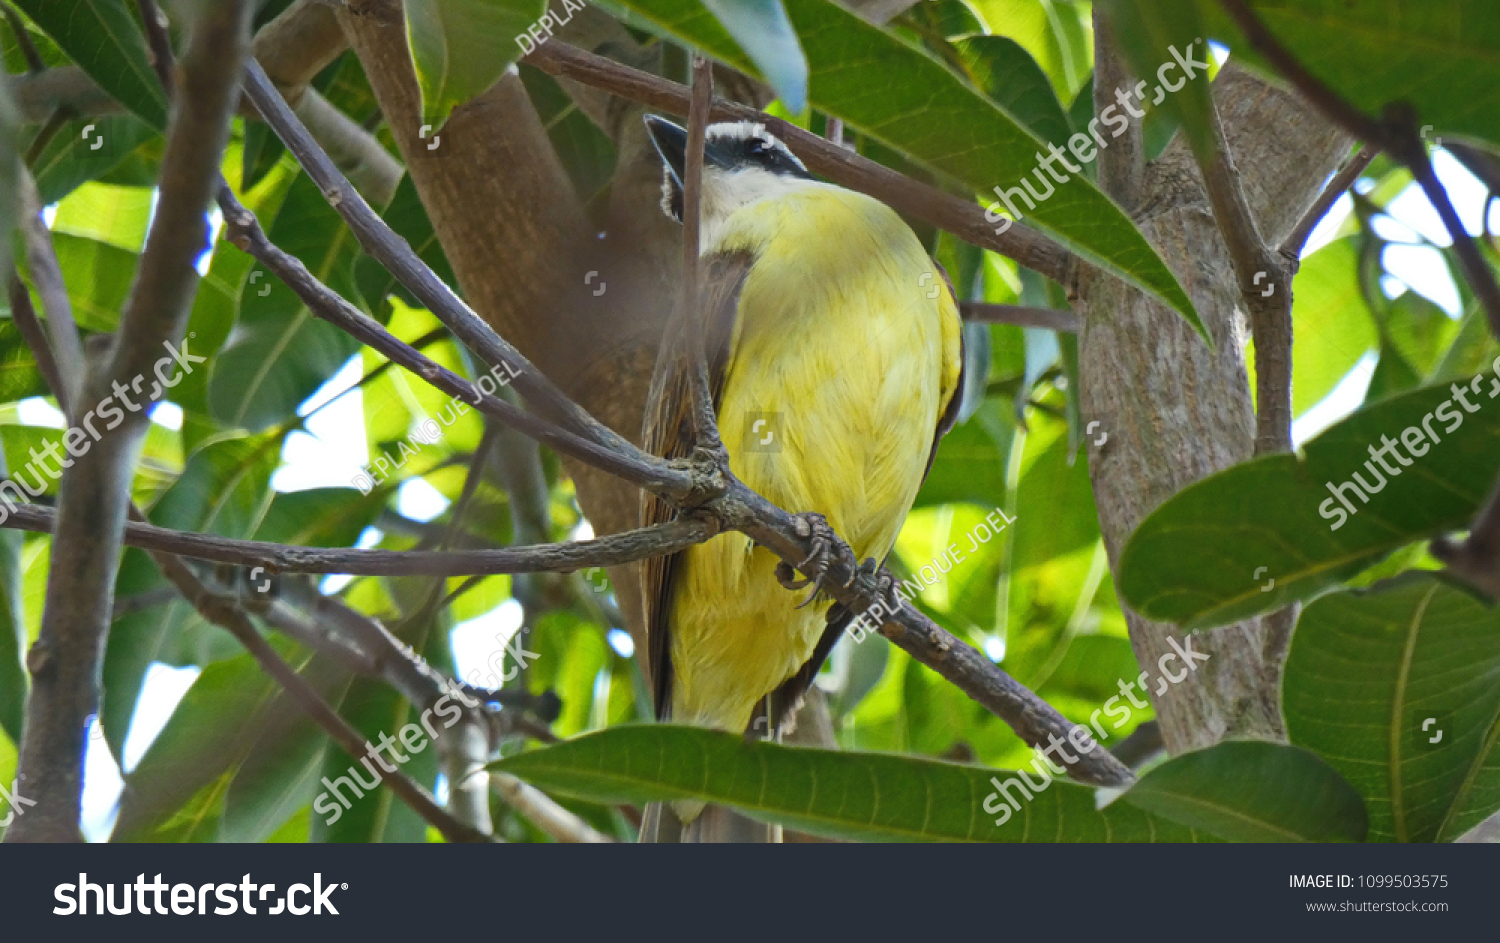 Great Kiskadee- Pitangus sulphuratus-Tyran quiquivi on a mango tree. #1099503575